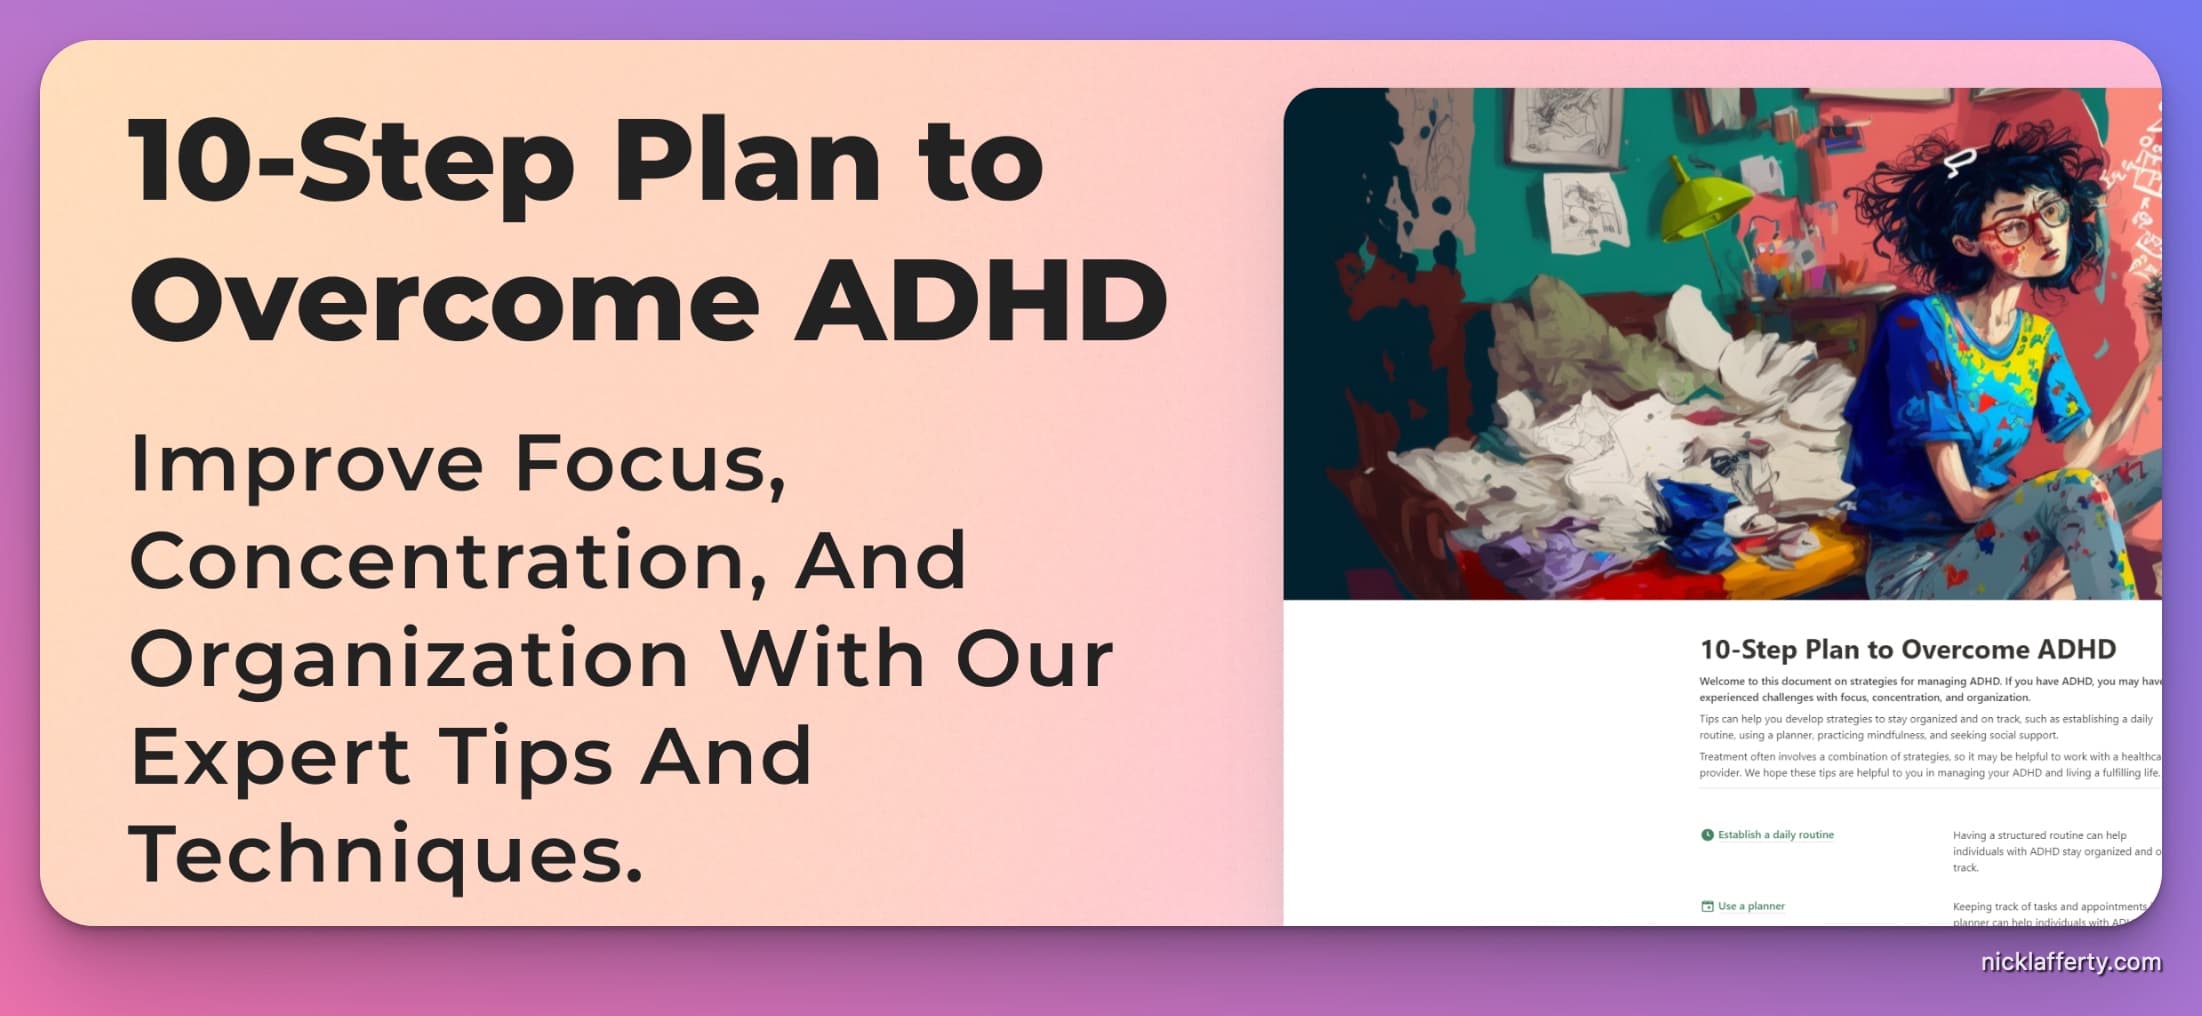 ADHD 10 Step Plan Template